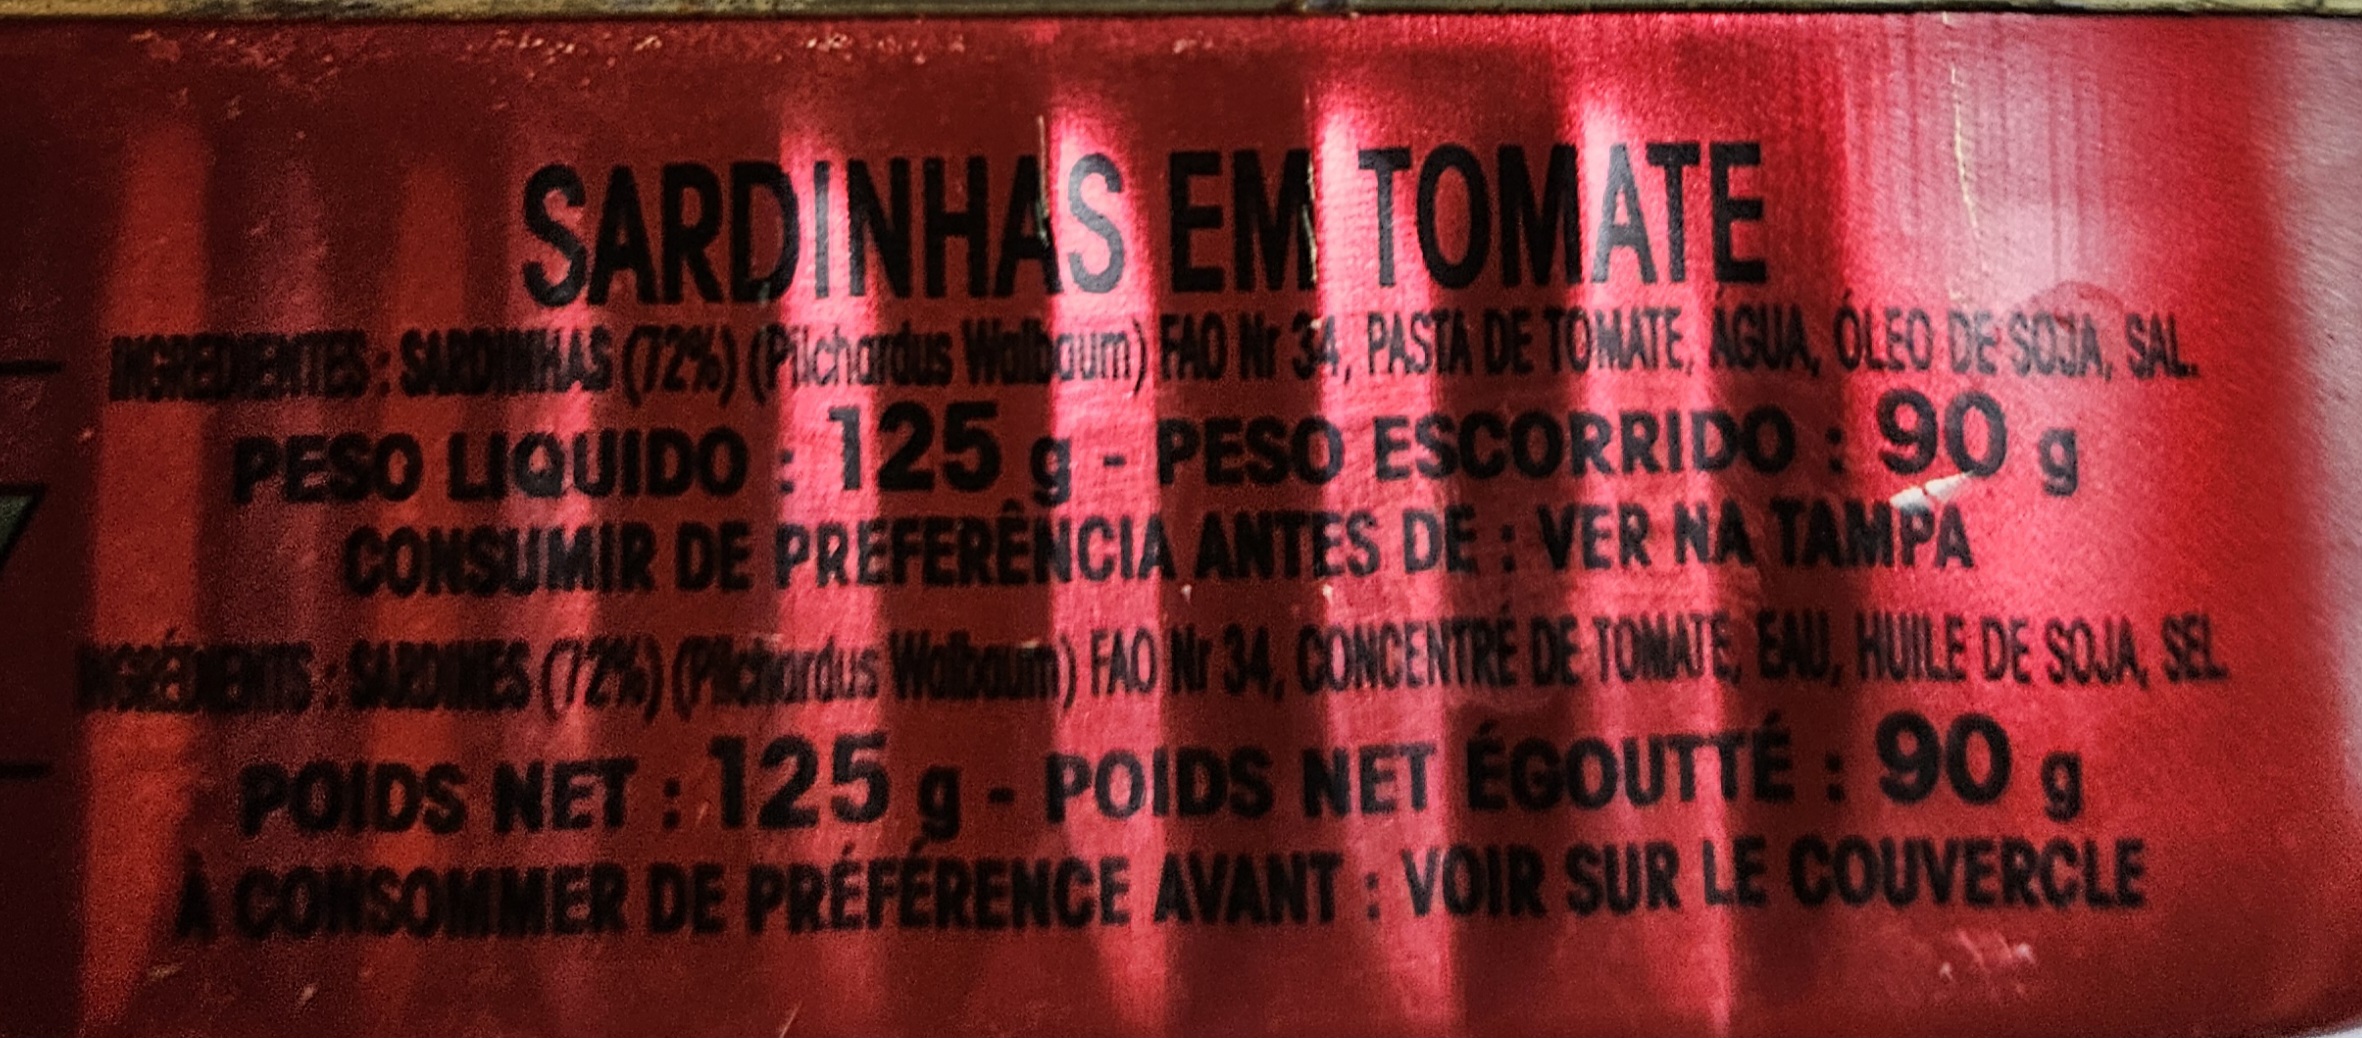 Anny sardines in tomato sauce – sardines à la sauce tomate – 125g